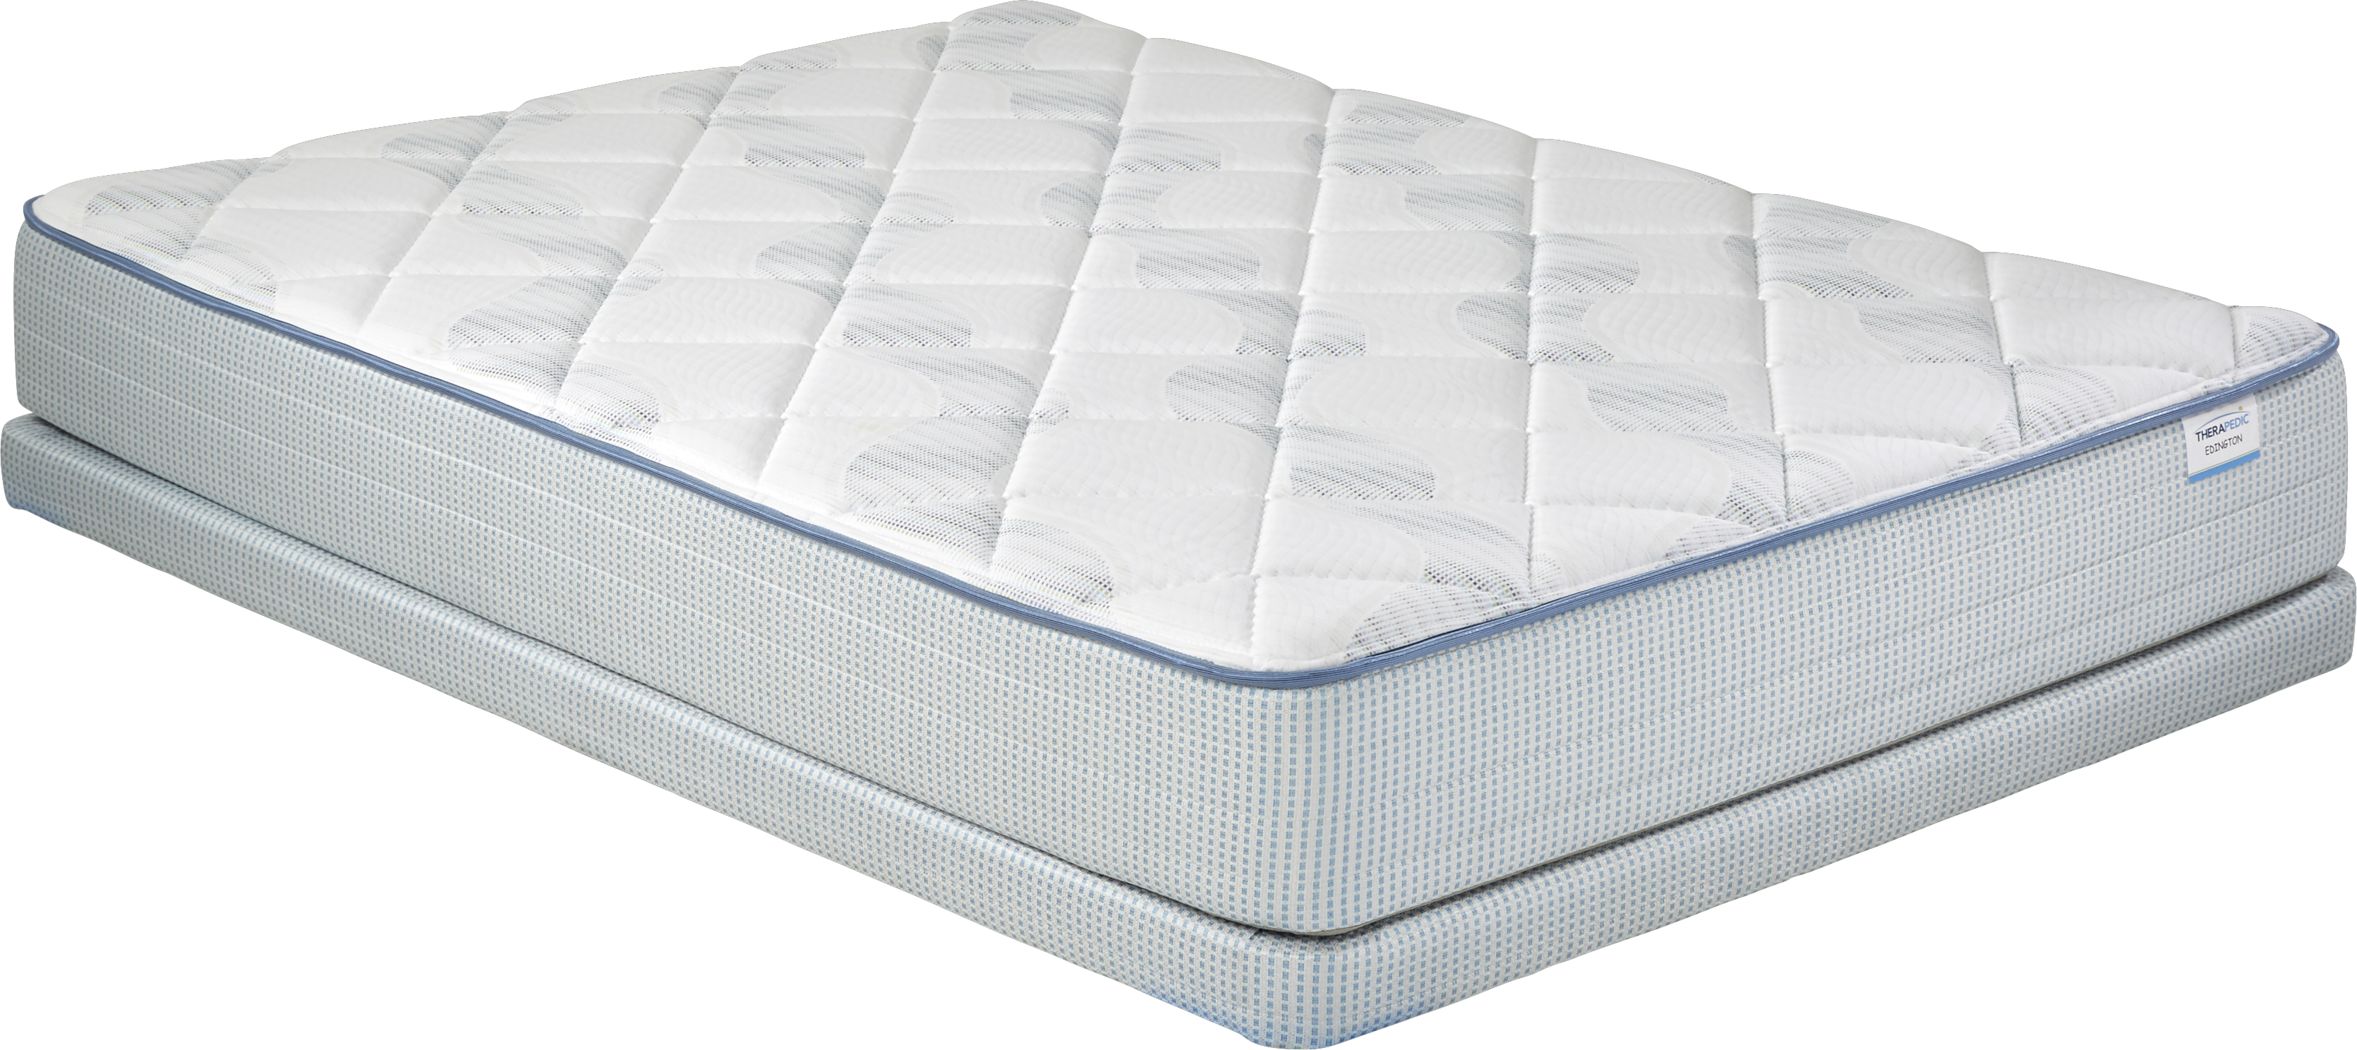 low profile air mattress